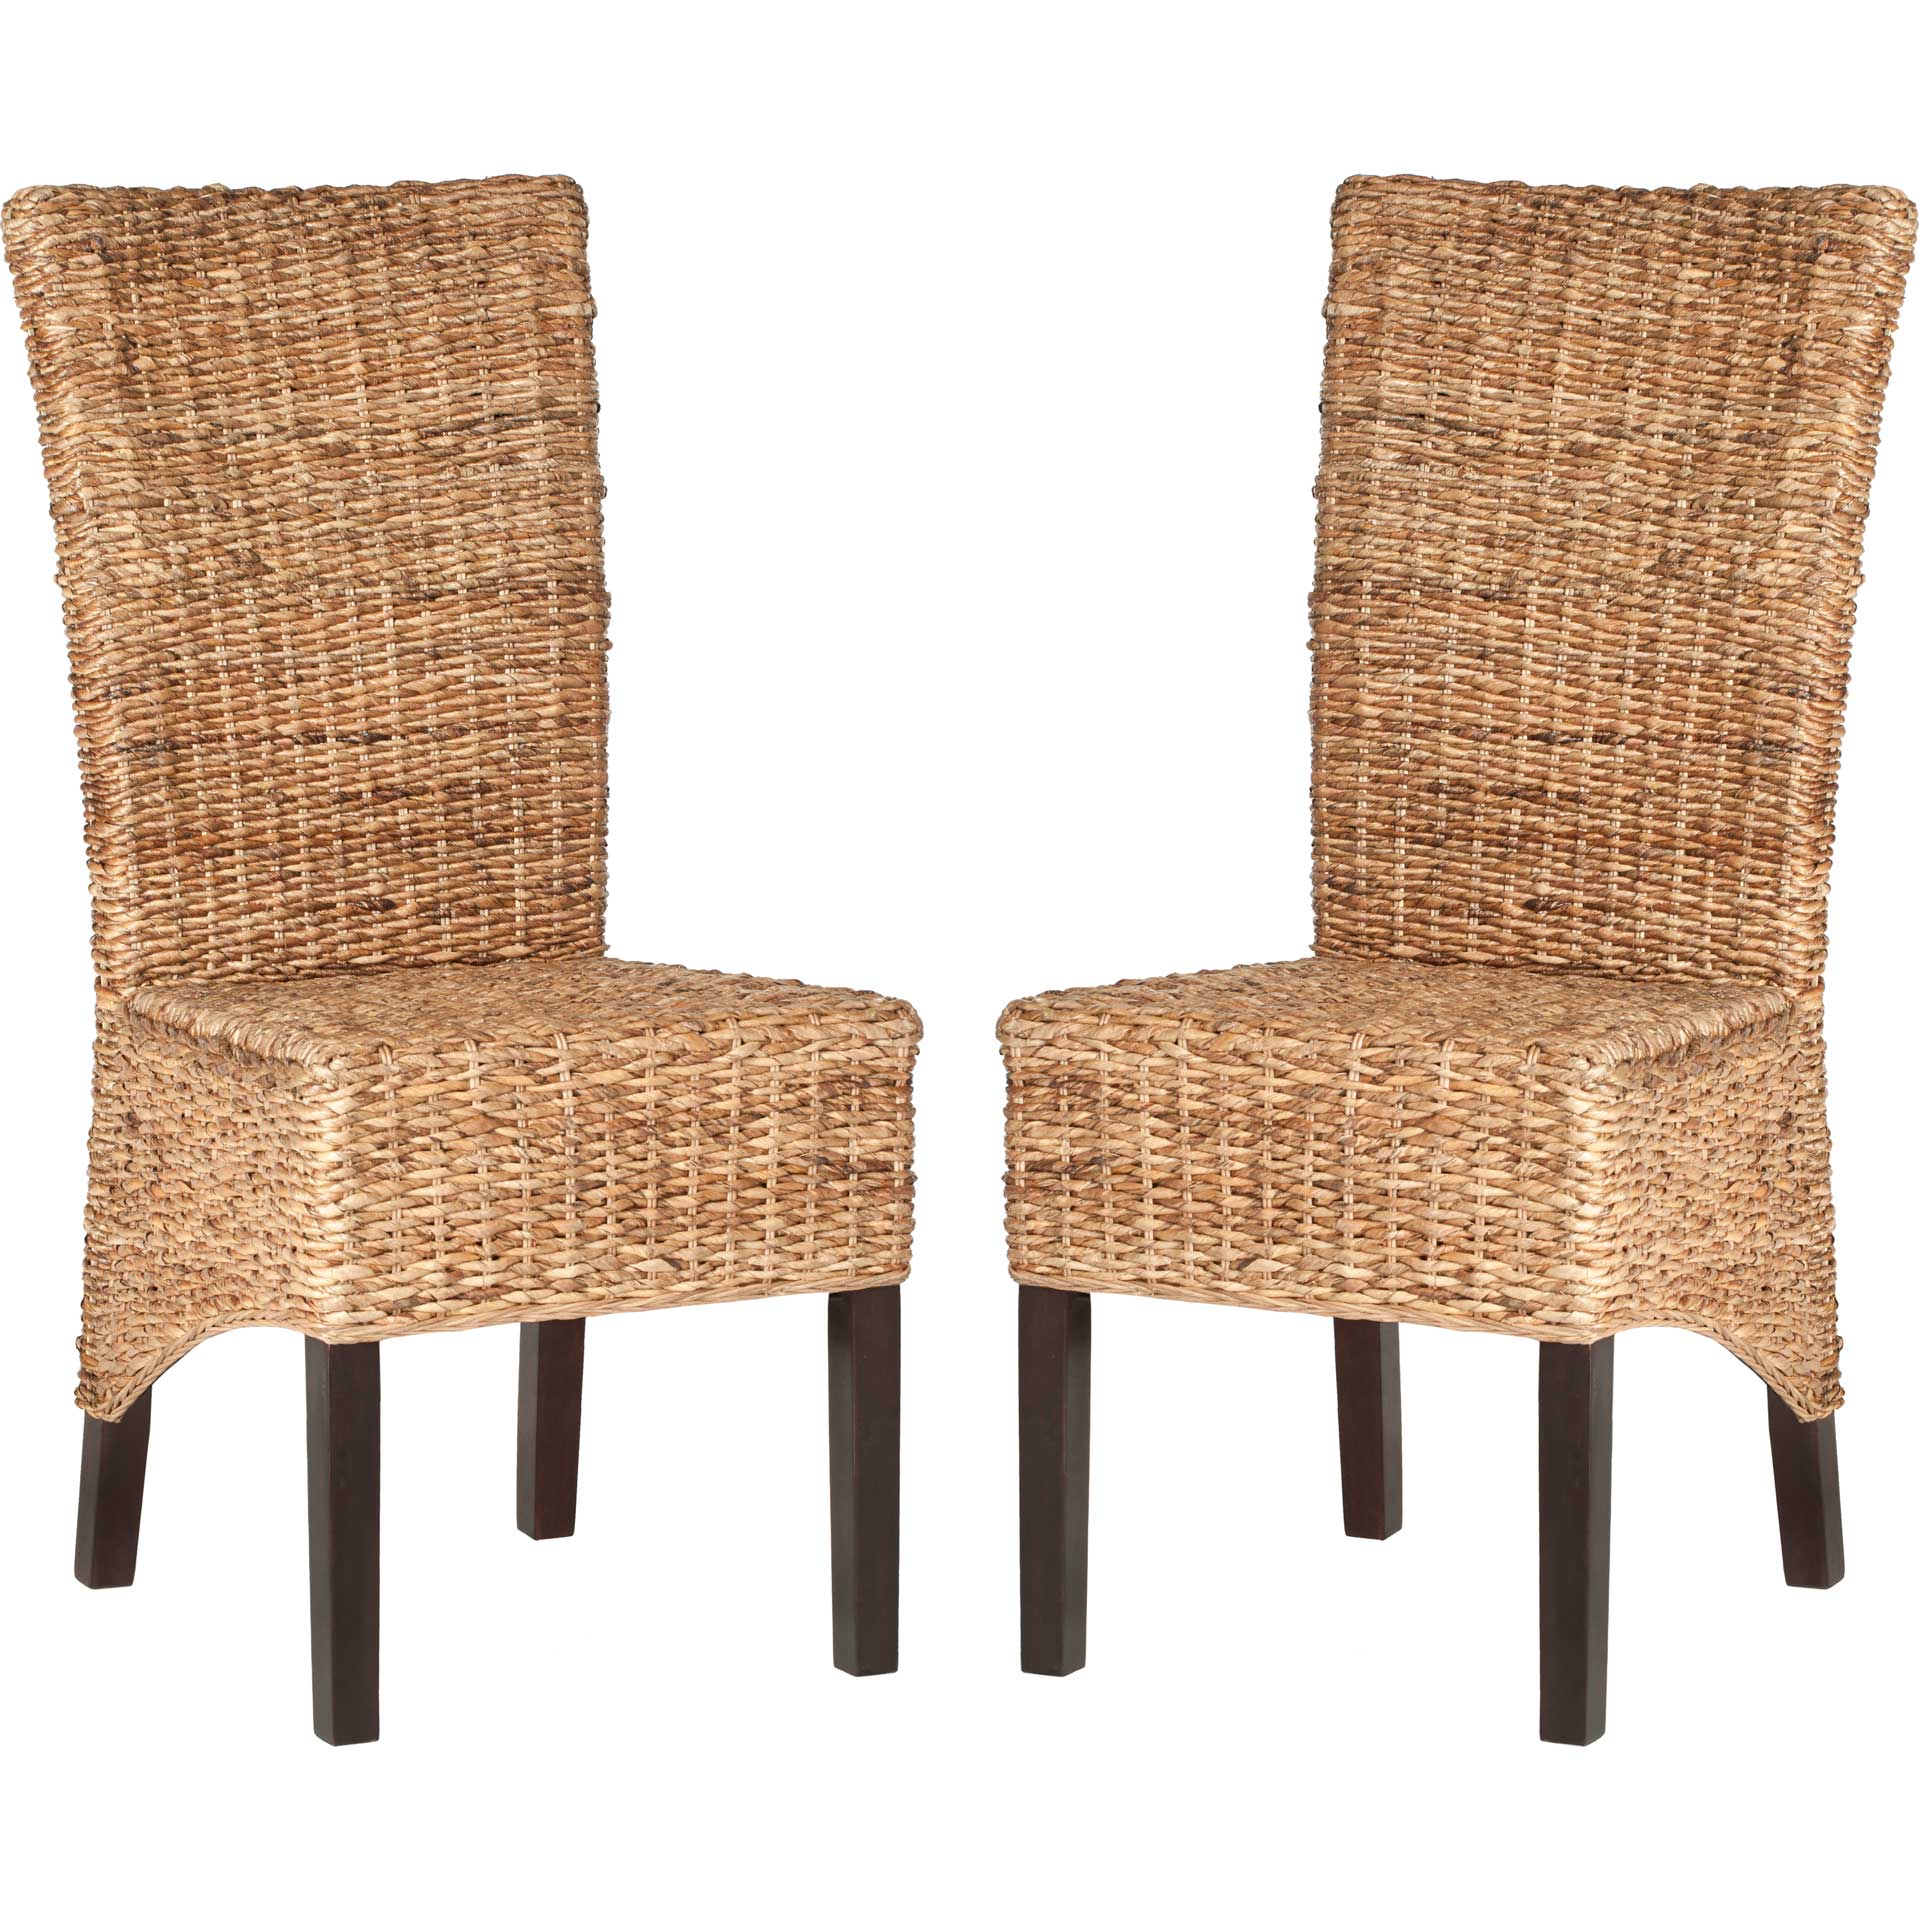 Kisii Rattan Side Chair Natural/Dark Brown (Set of 2)